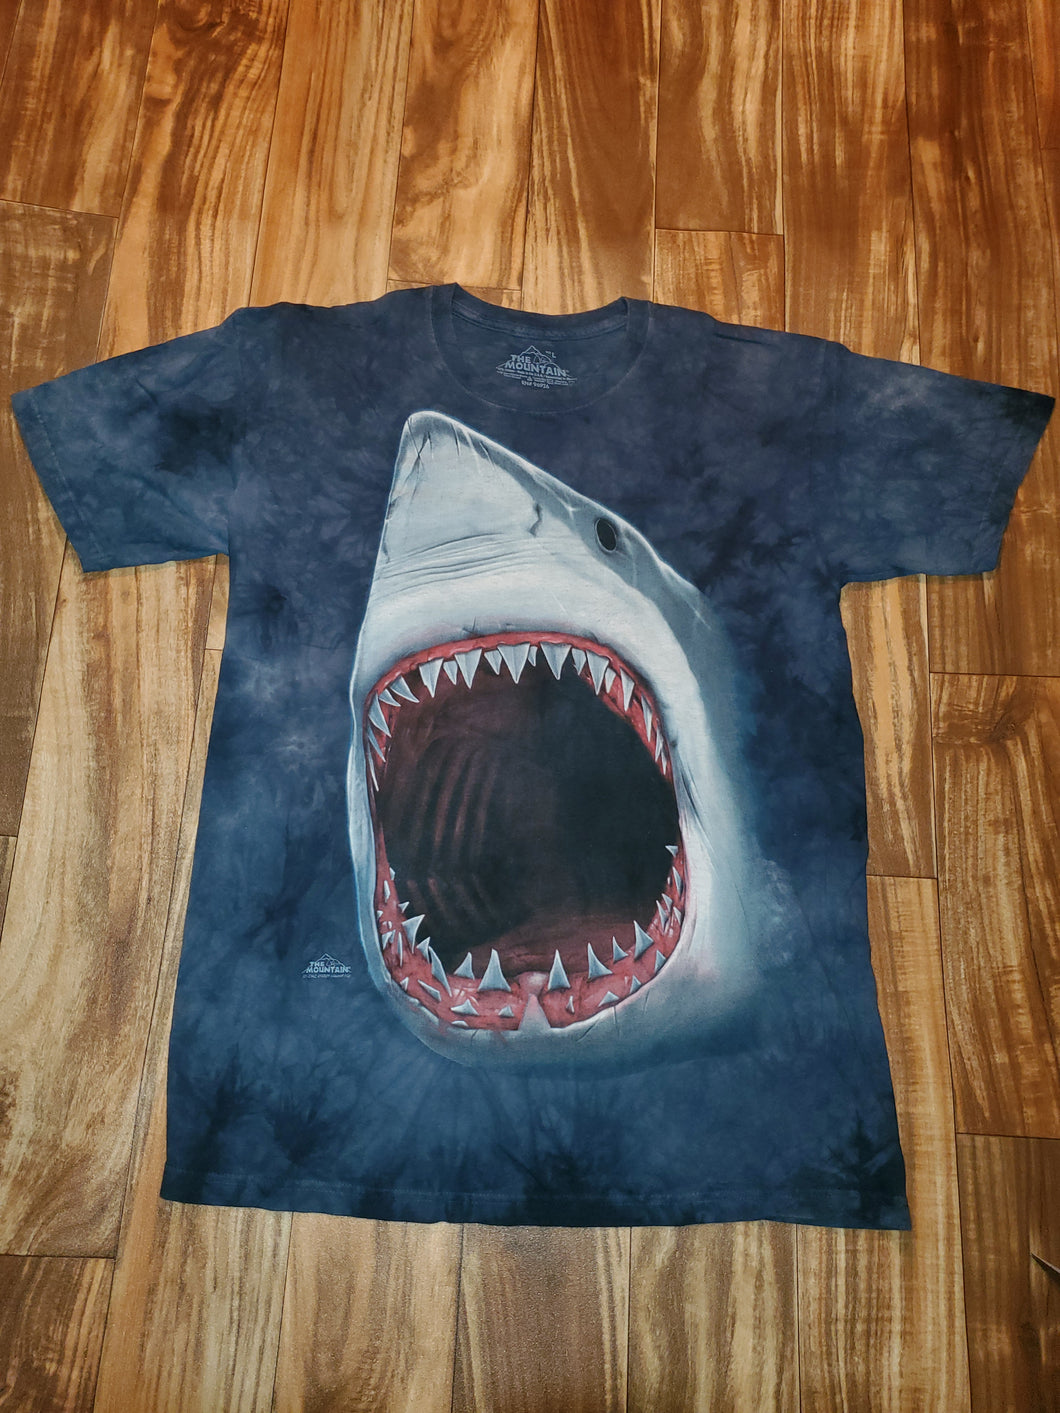 L - 2009 Shark The Mountain Shirt